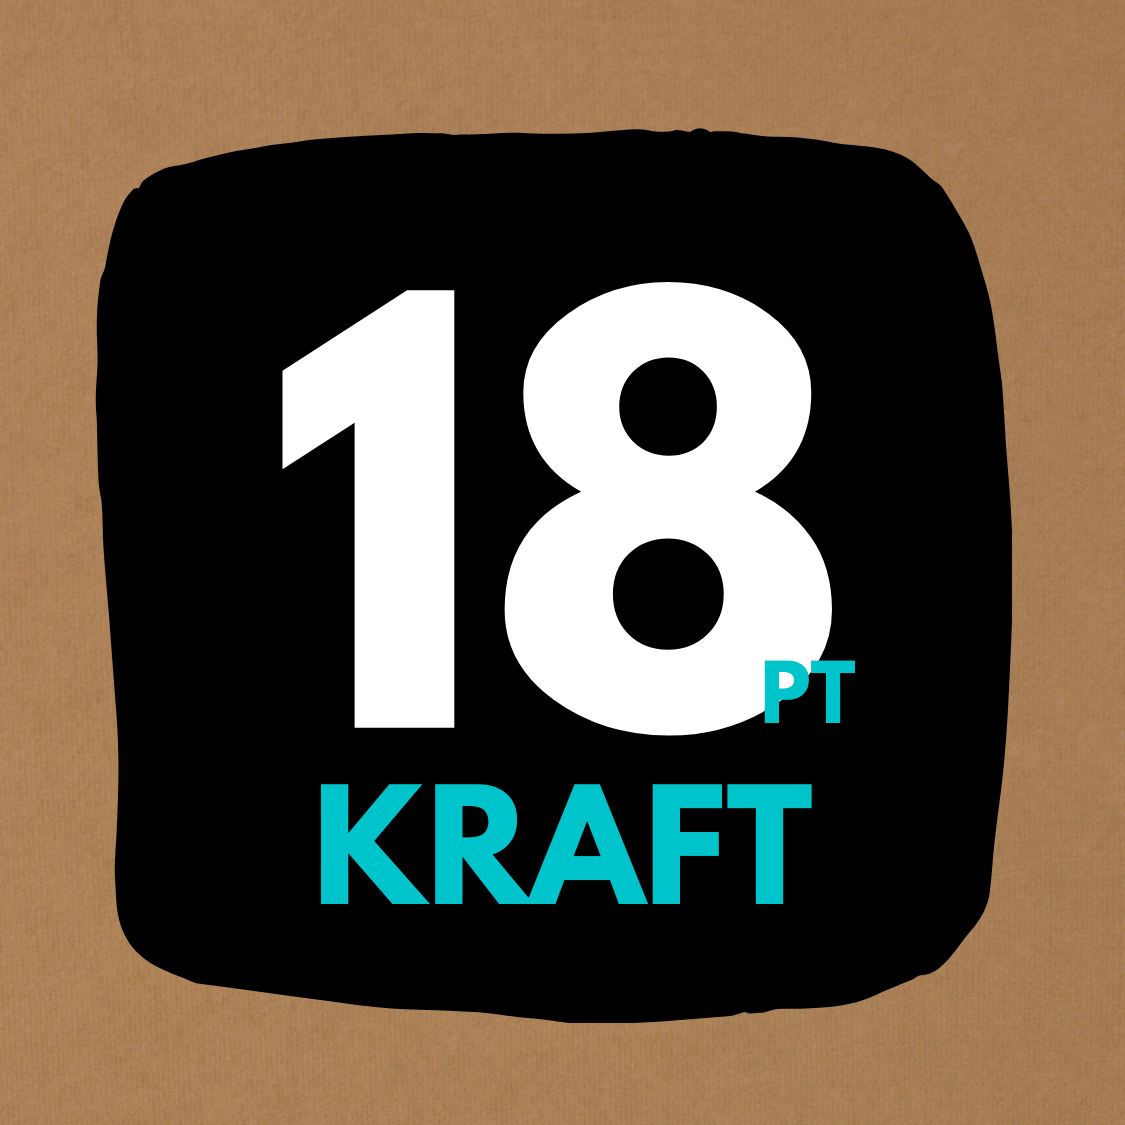 18pt Kraft